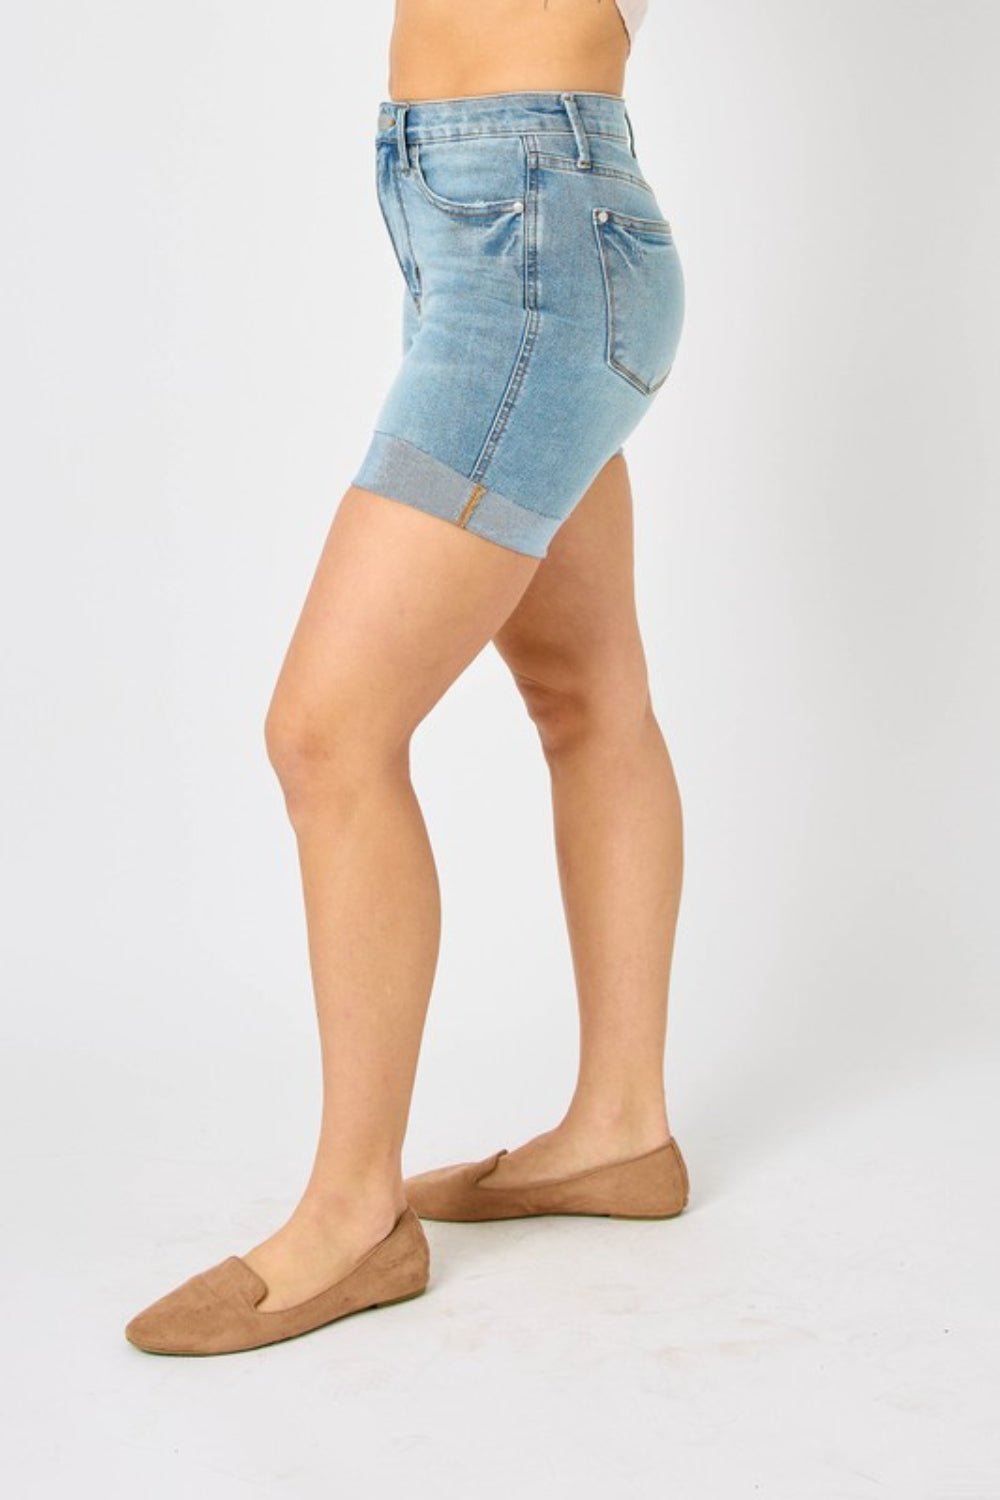 Judy Blue Full Size Tummy Control Denim Shorts - Stylish, Comfortable and Flattering